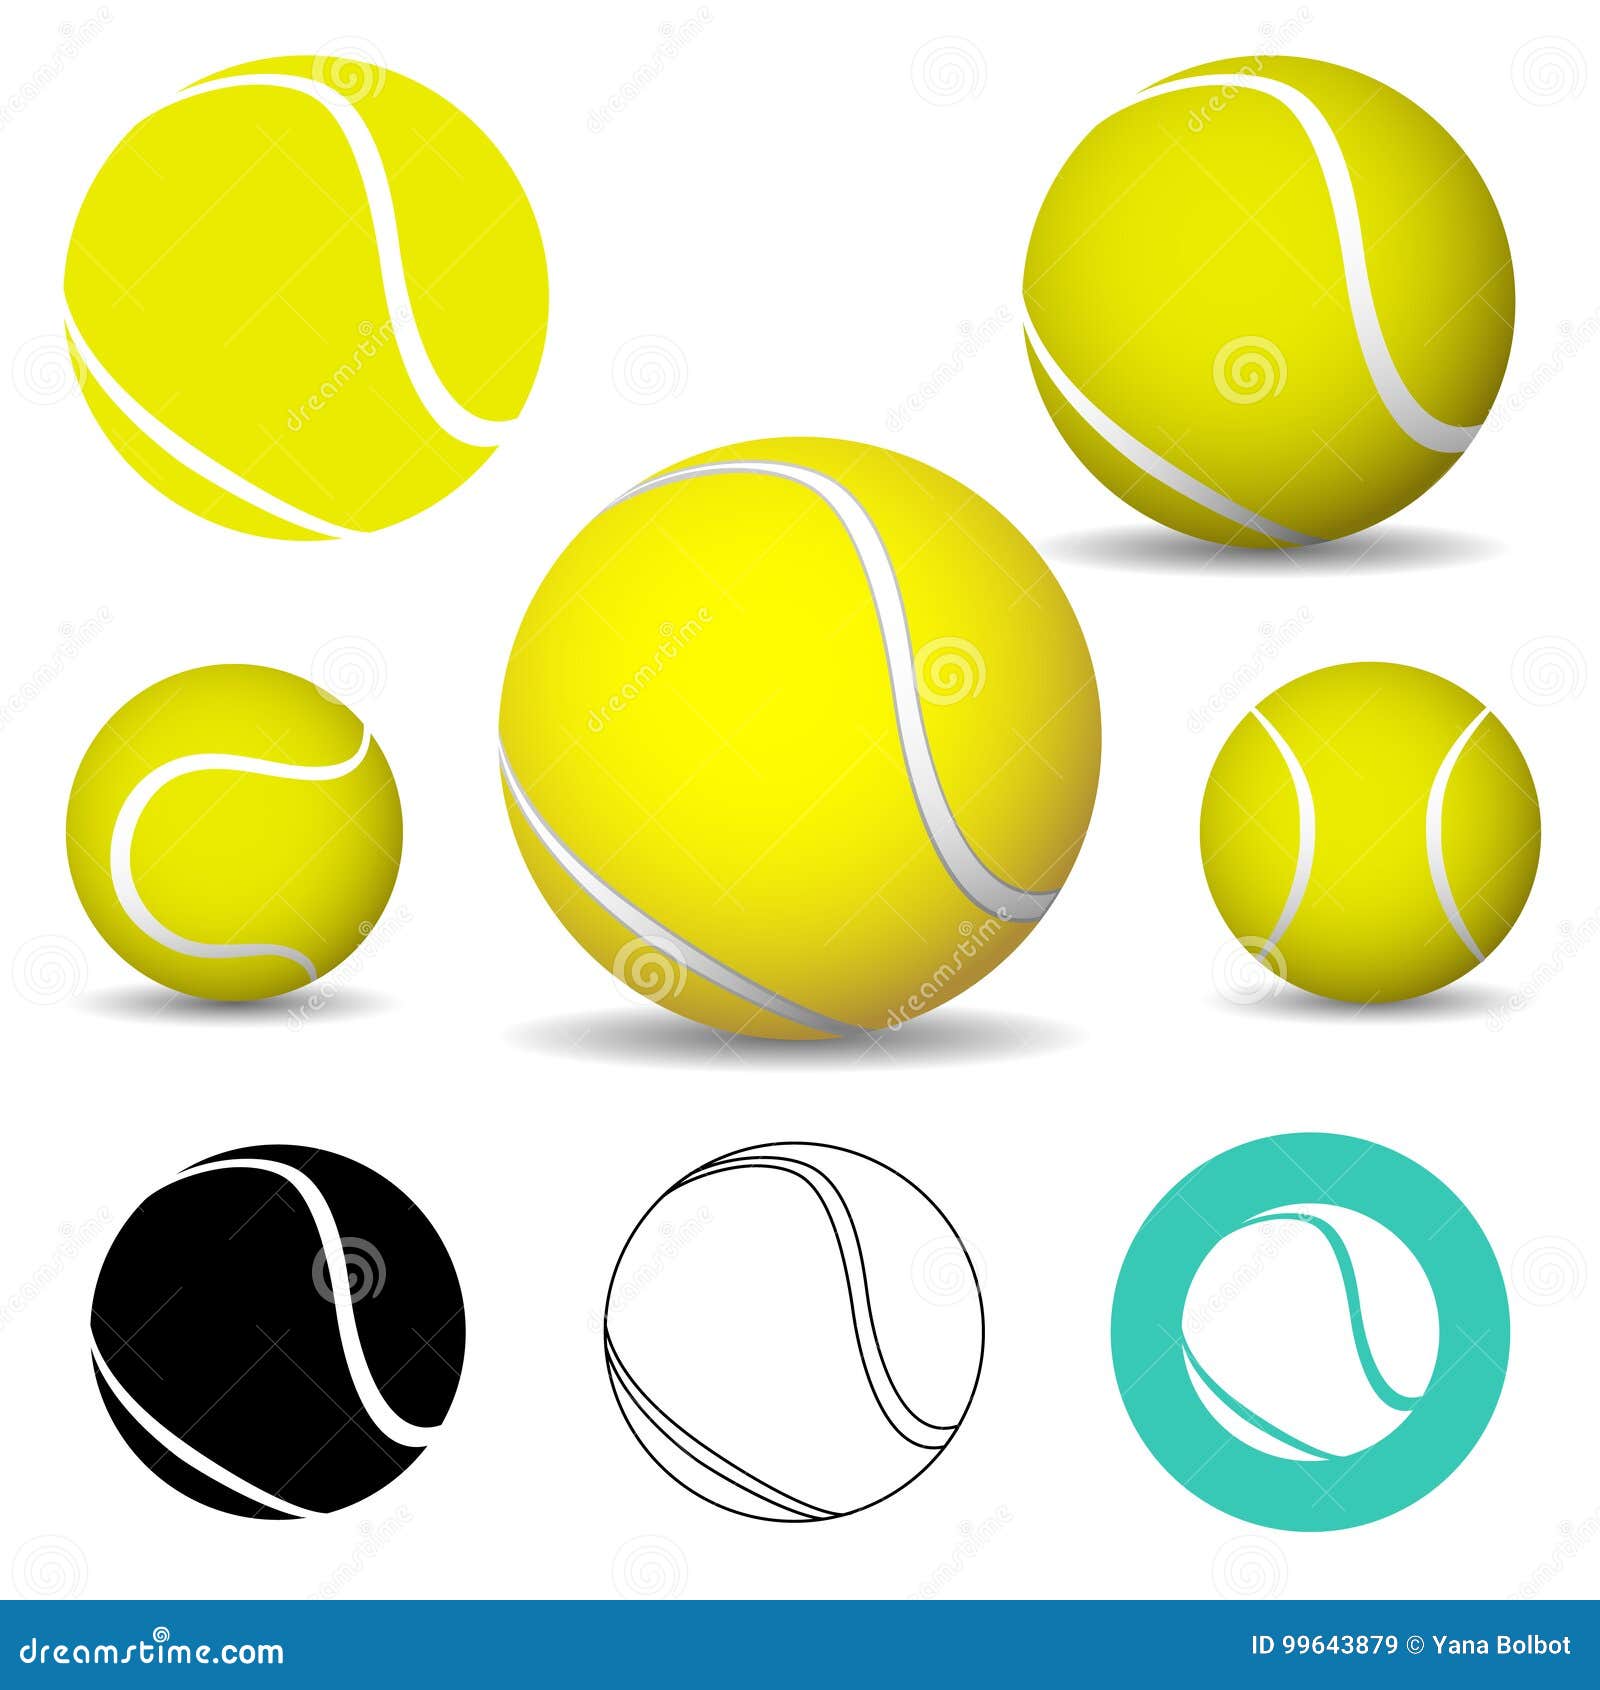 tennis ball, icons